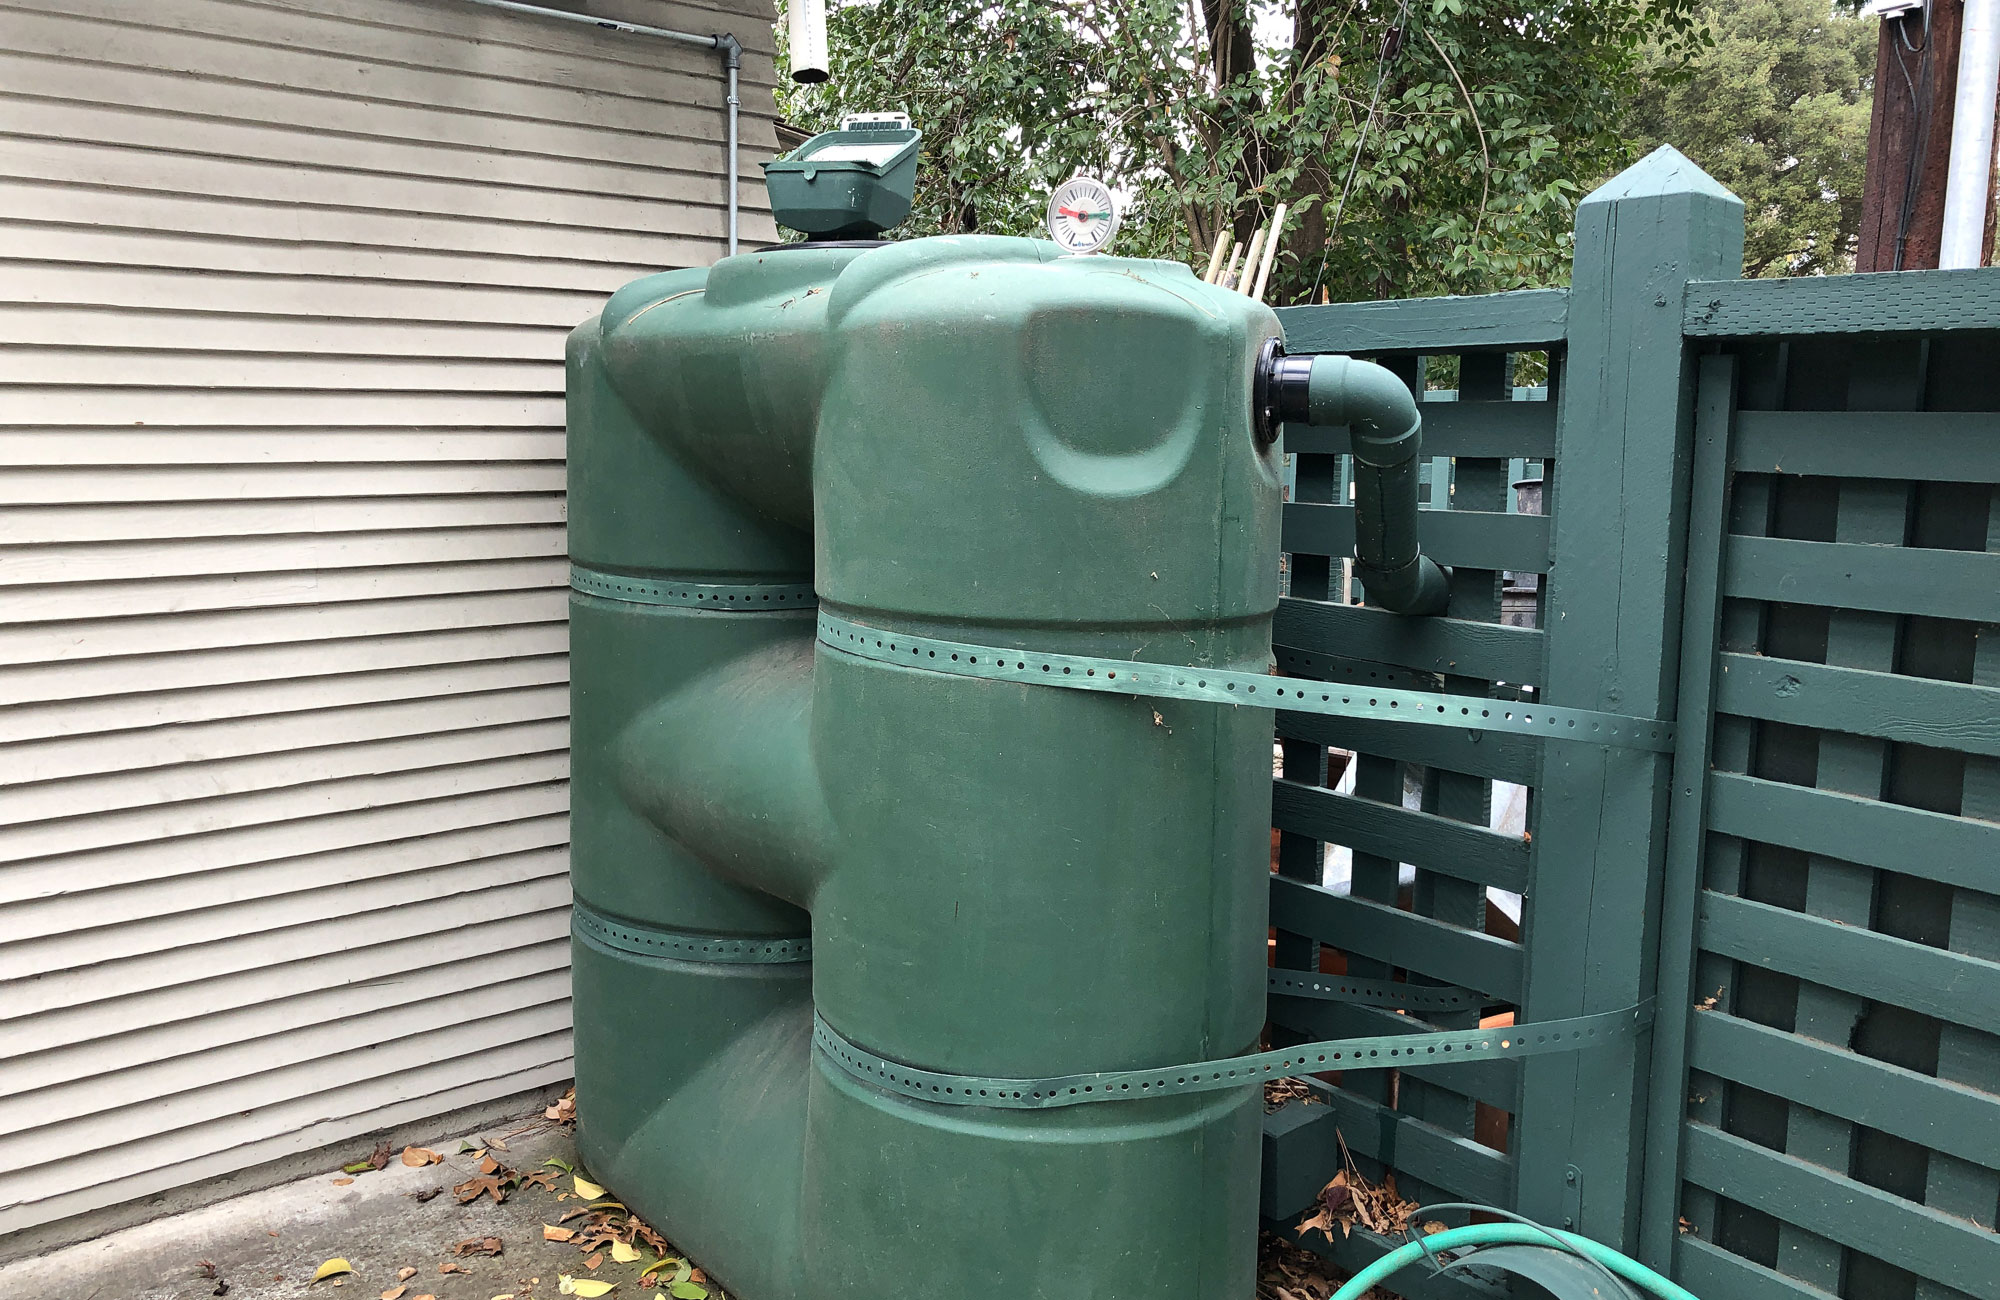 Rainwater harvesting via above-ground cistern.